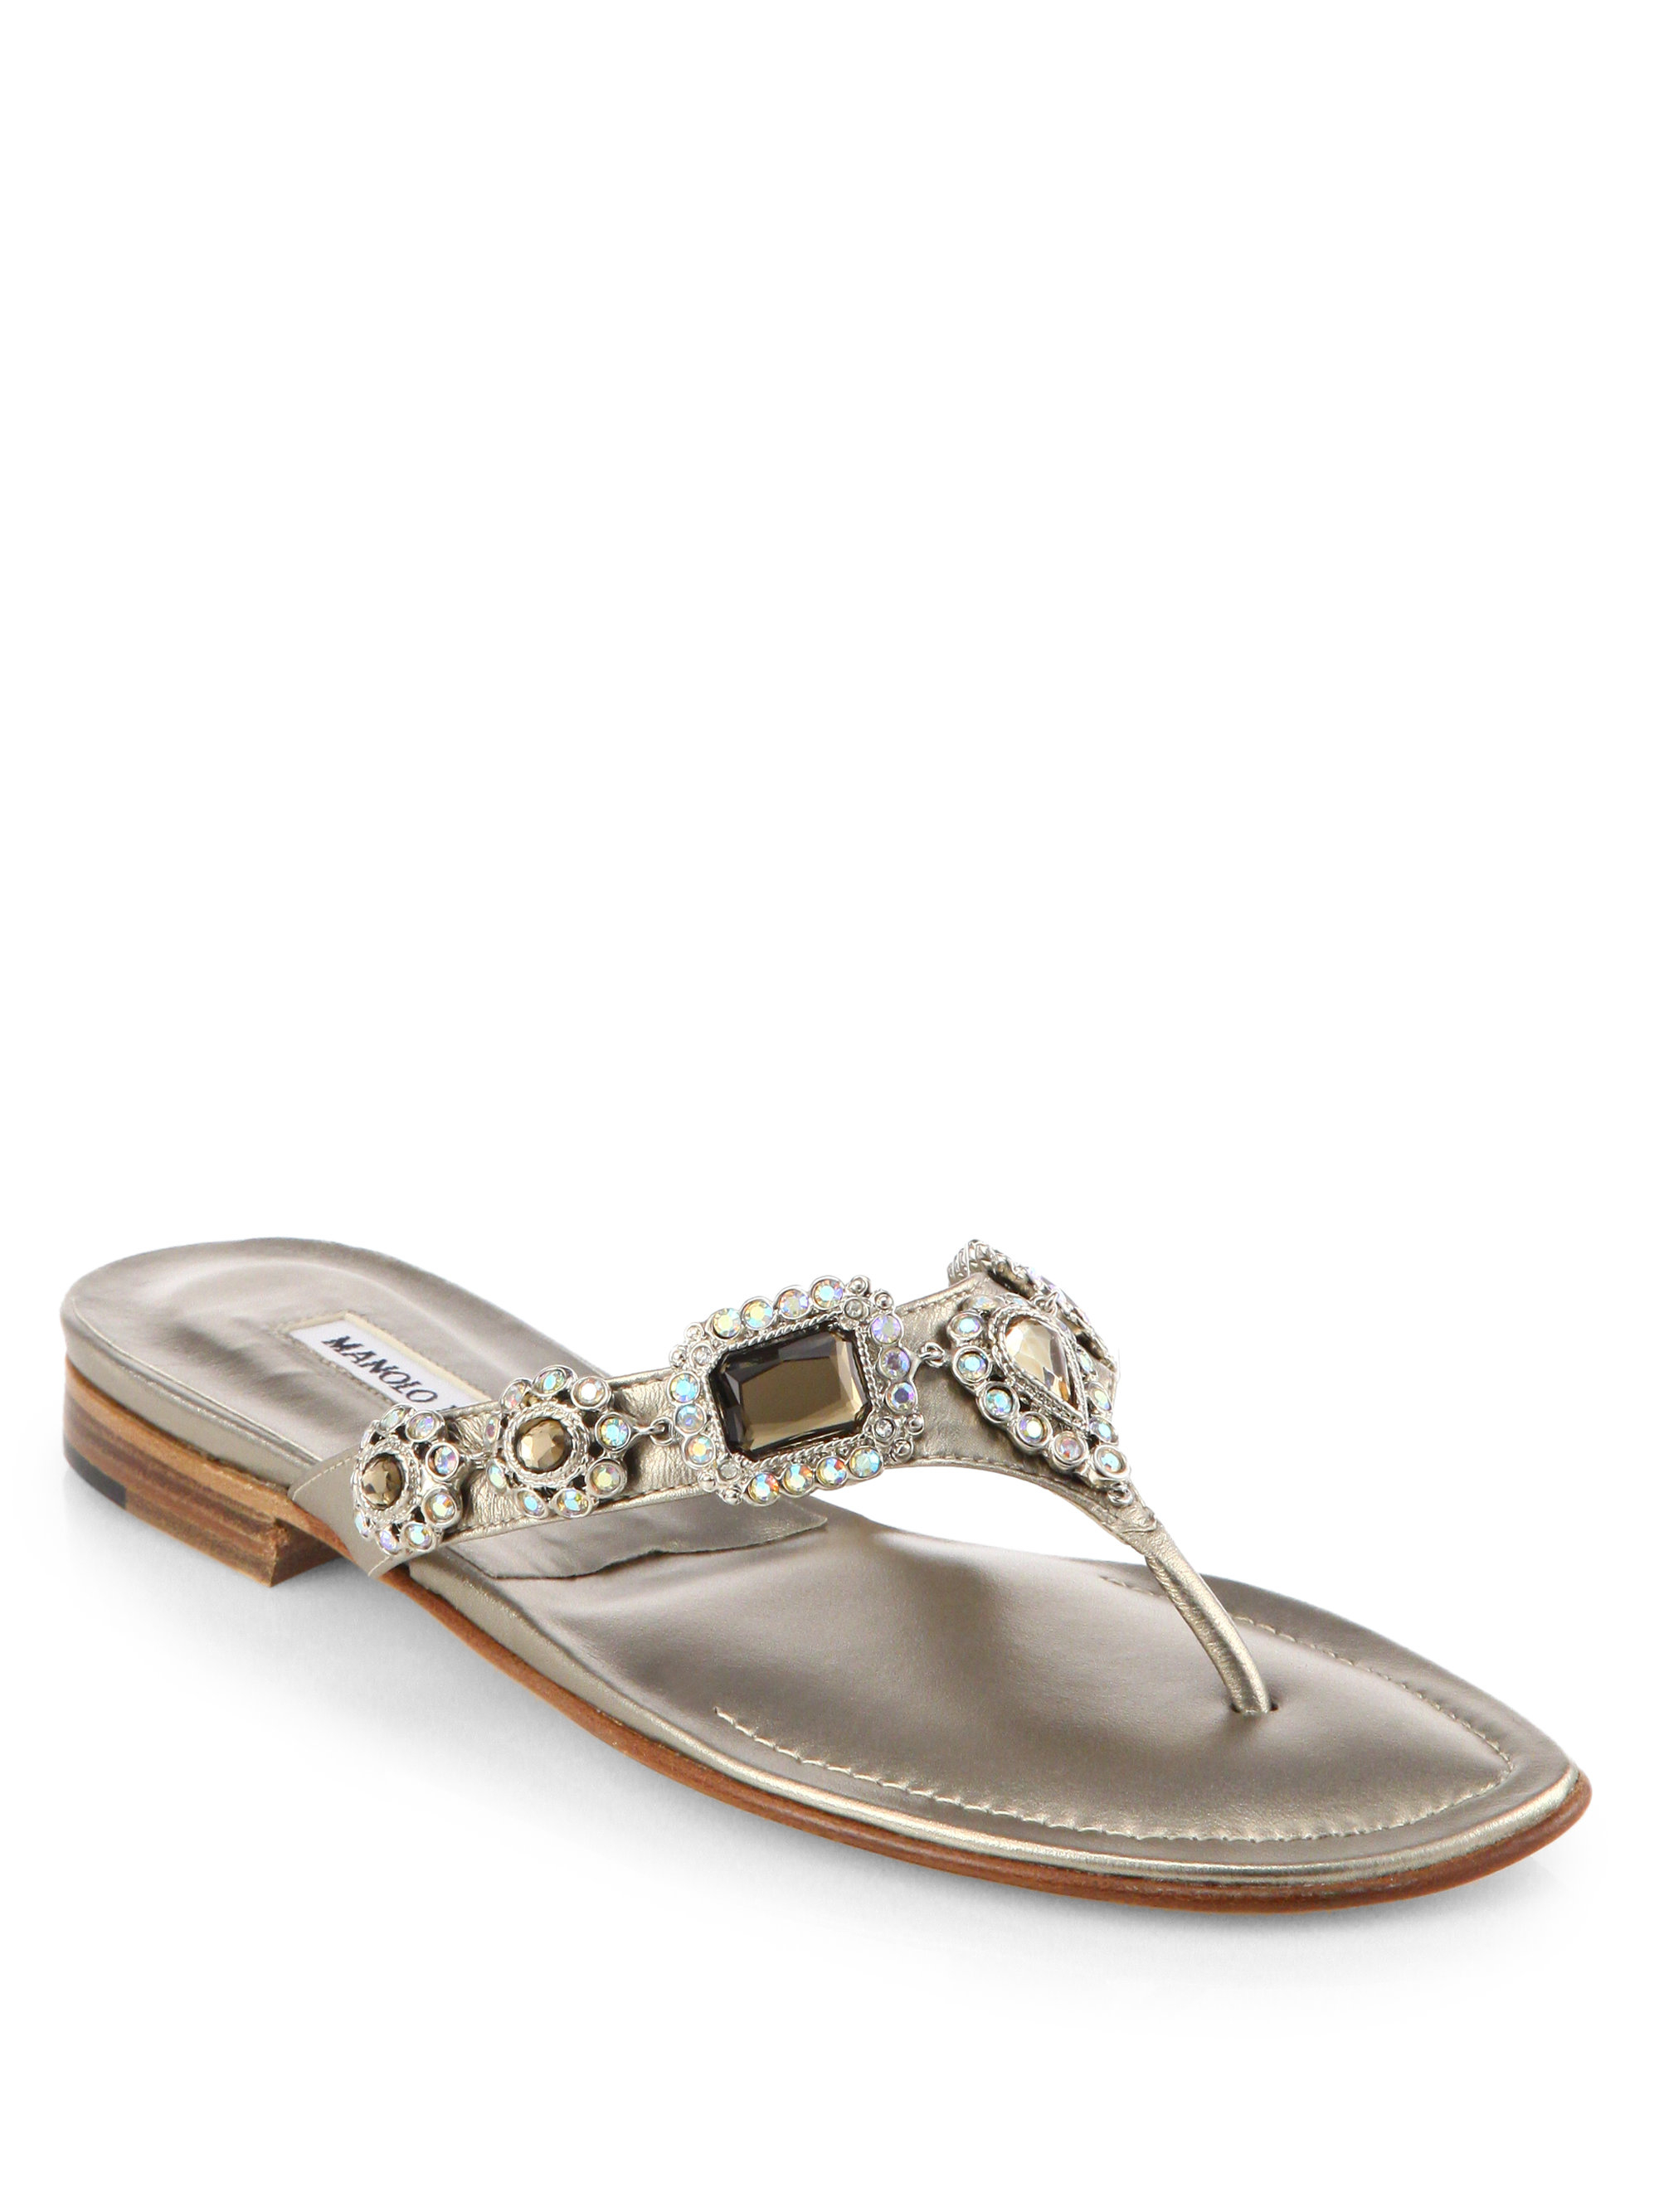 Manolo Blahnik Cesabi Jeweled Metallic Leather Thong Sandals in Silver ...